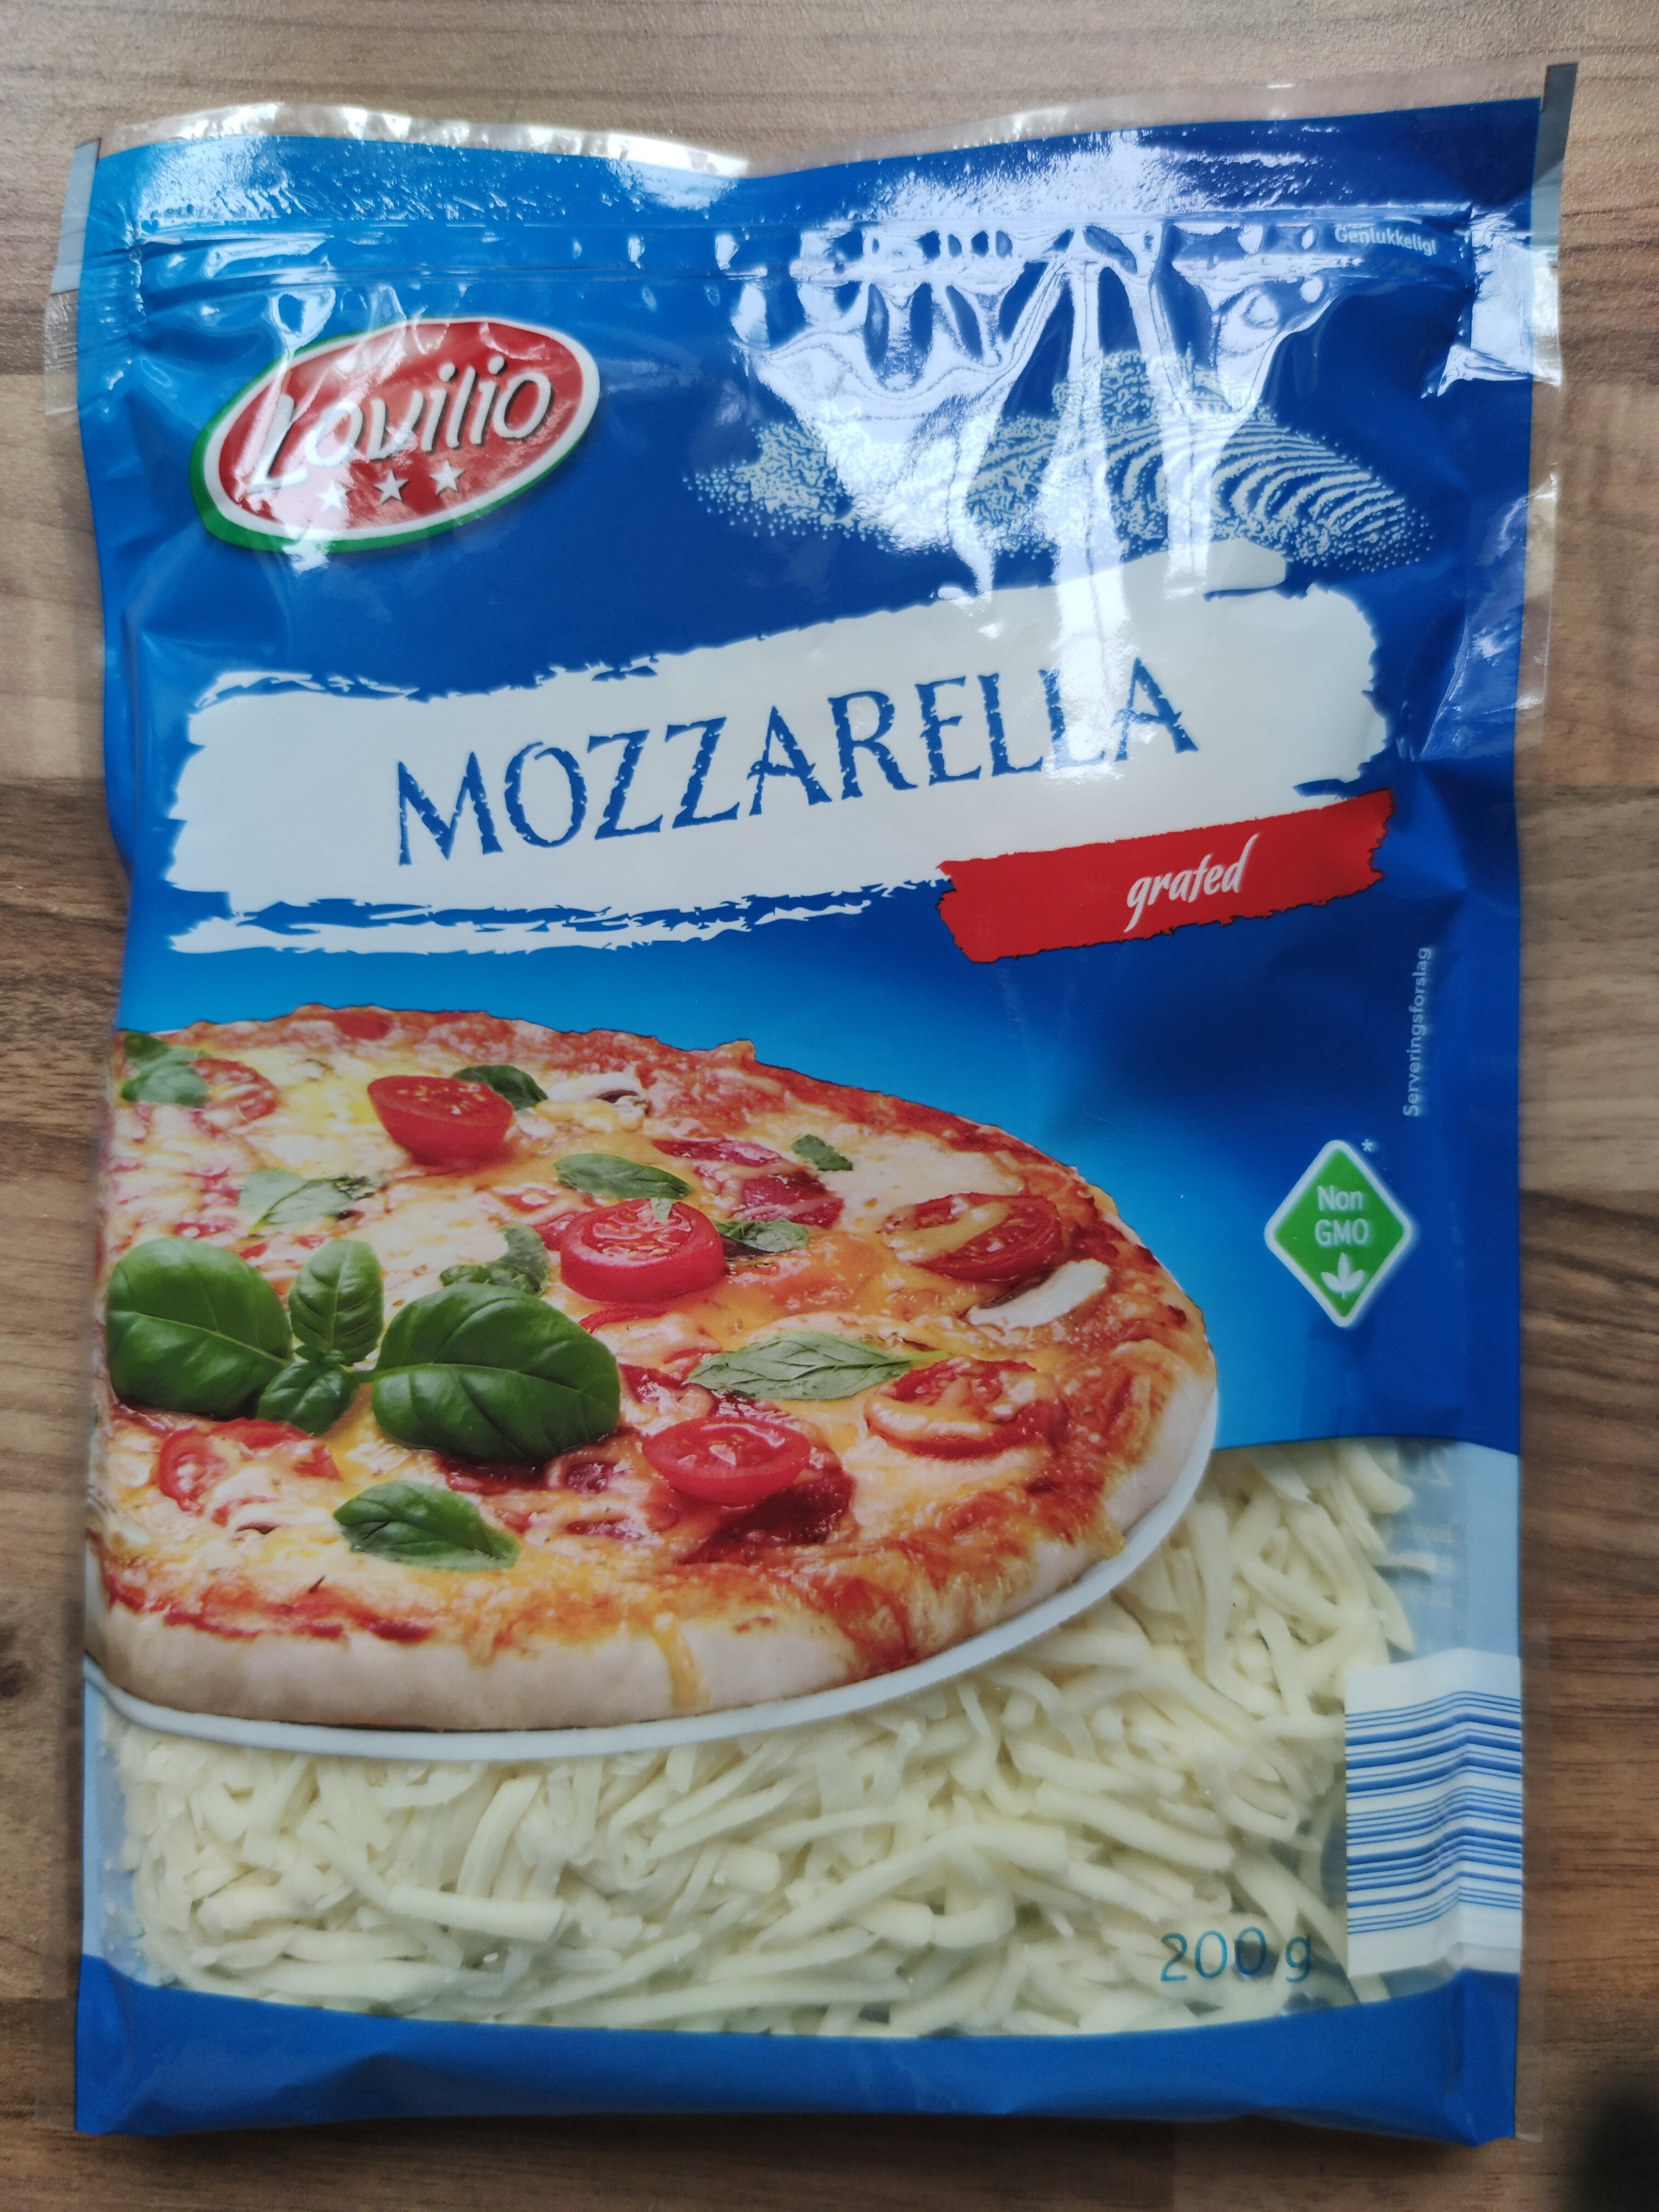 mozzarella grated - Produkt - da